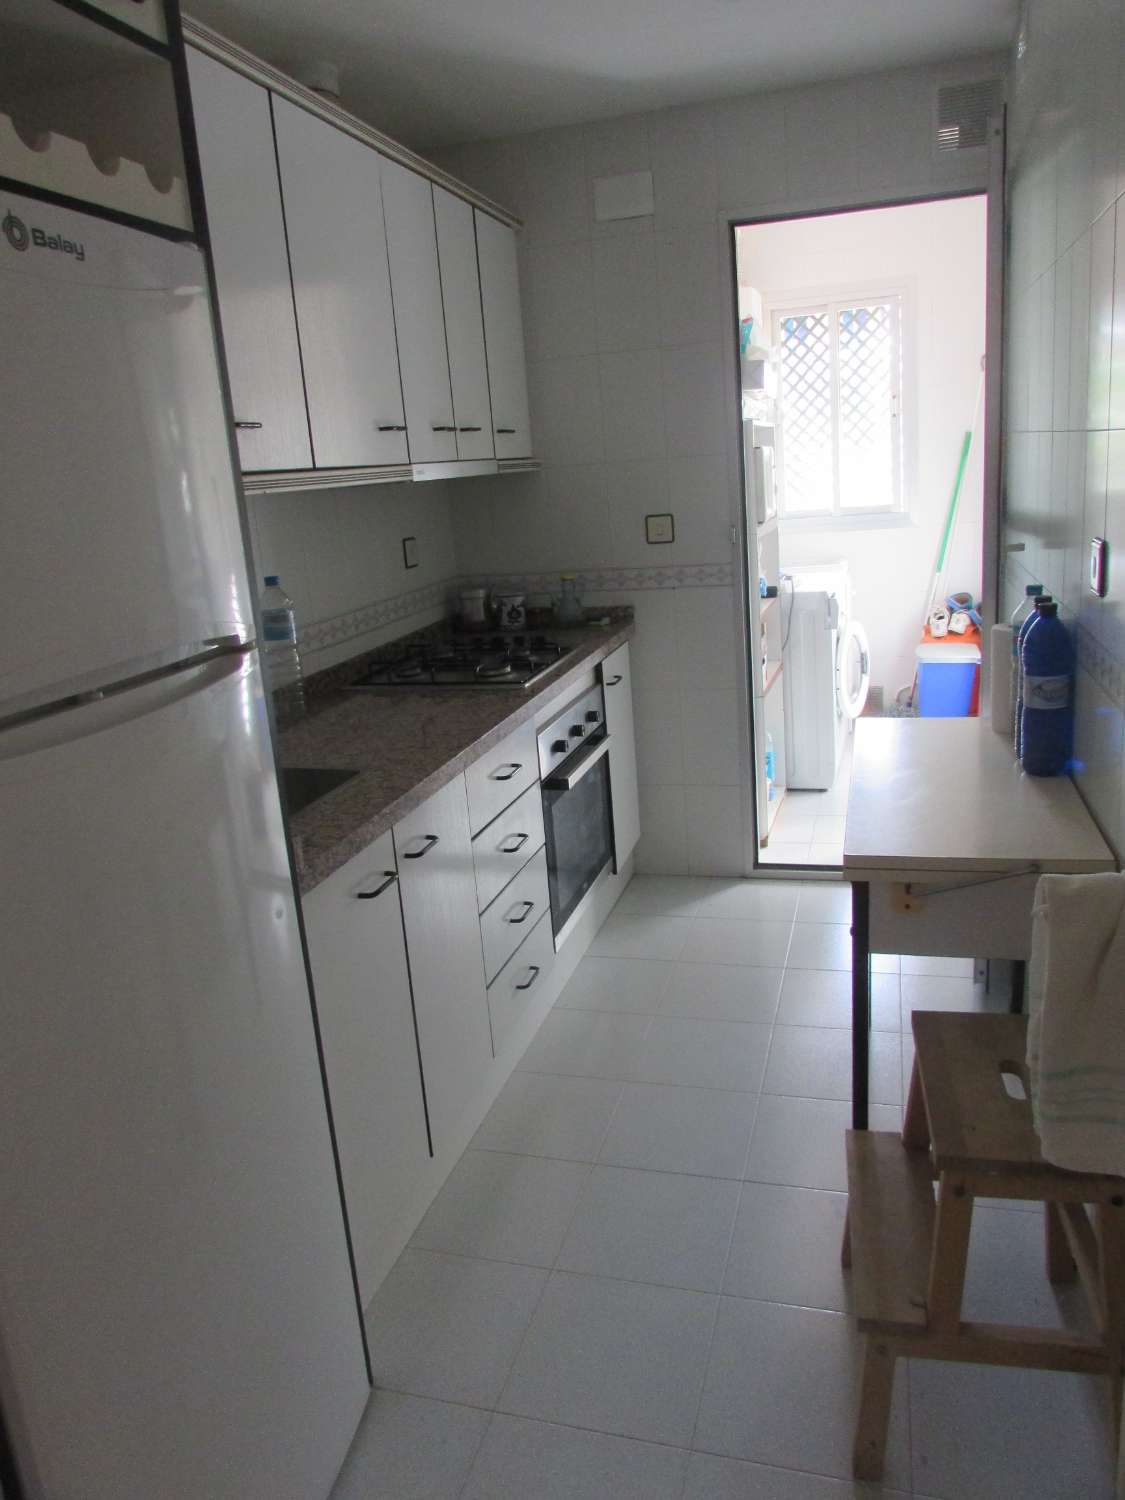 Estupendo apartamento con amplia terraza en venta en Urb Perla de Andalucia